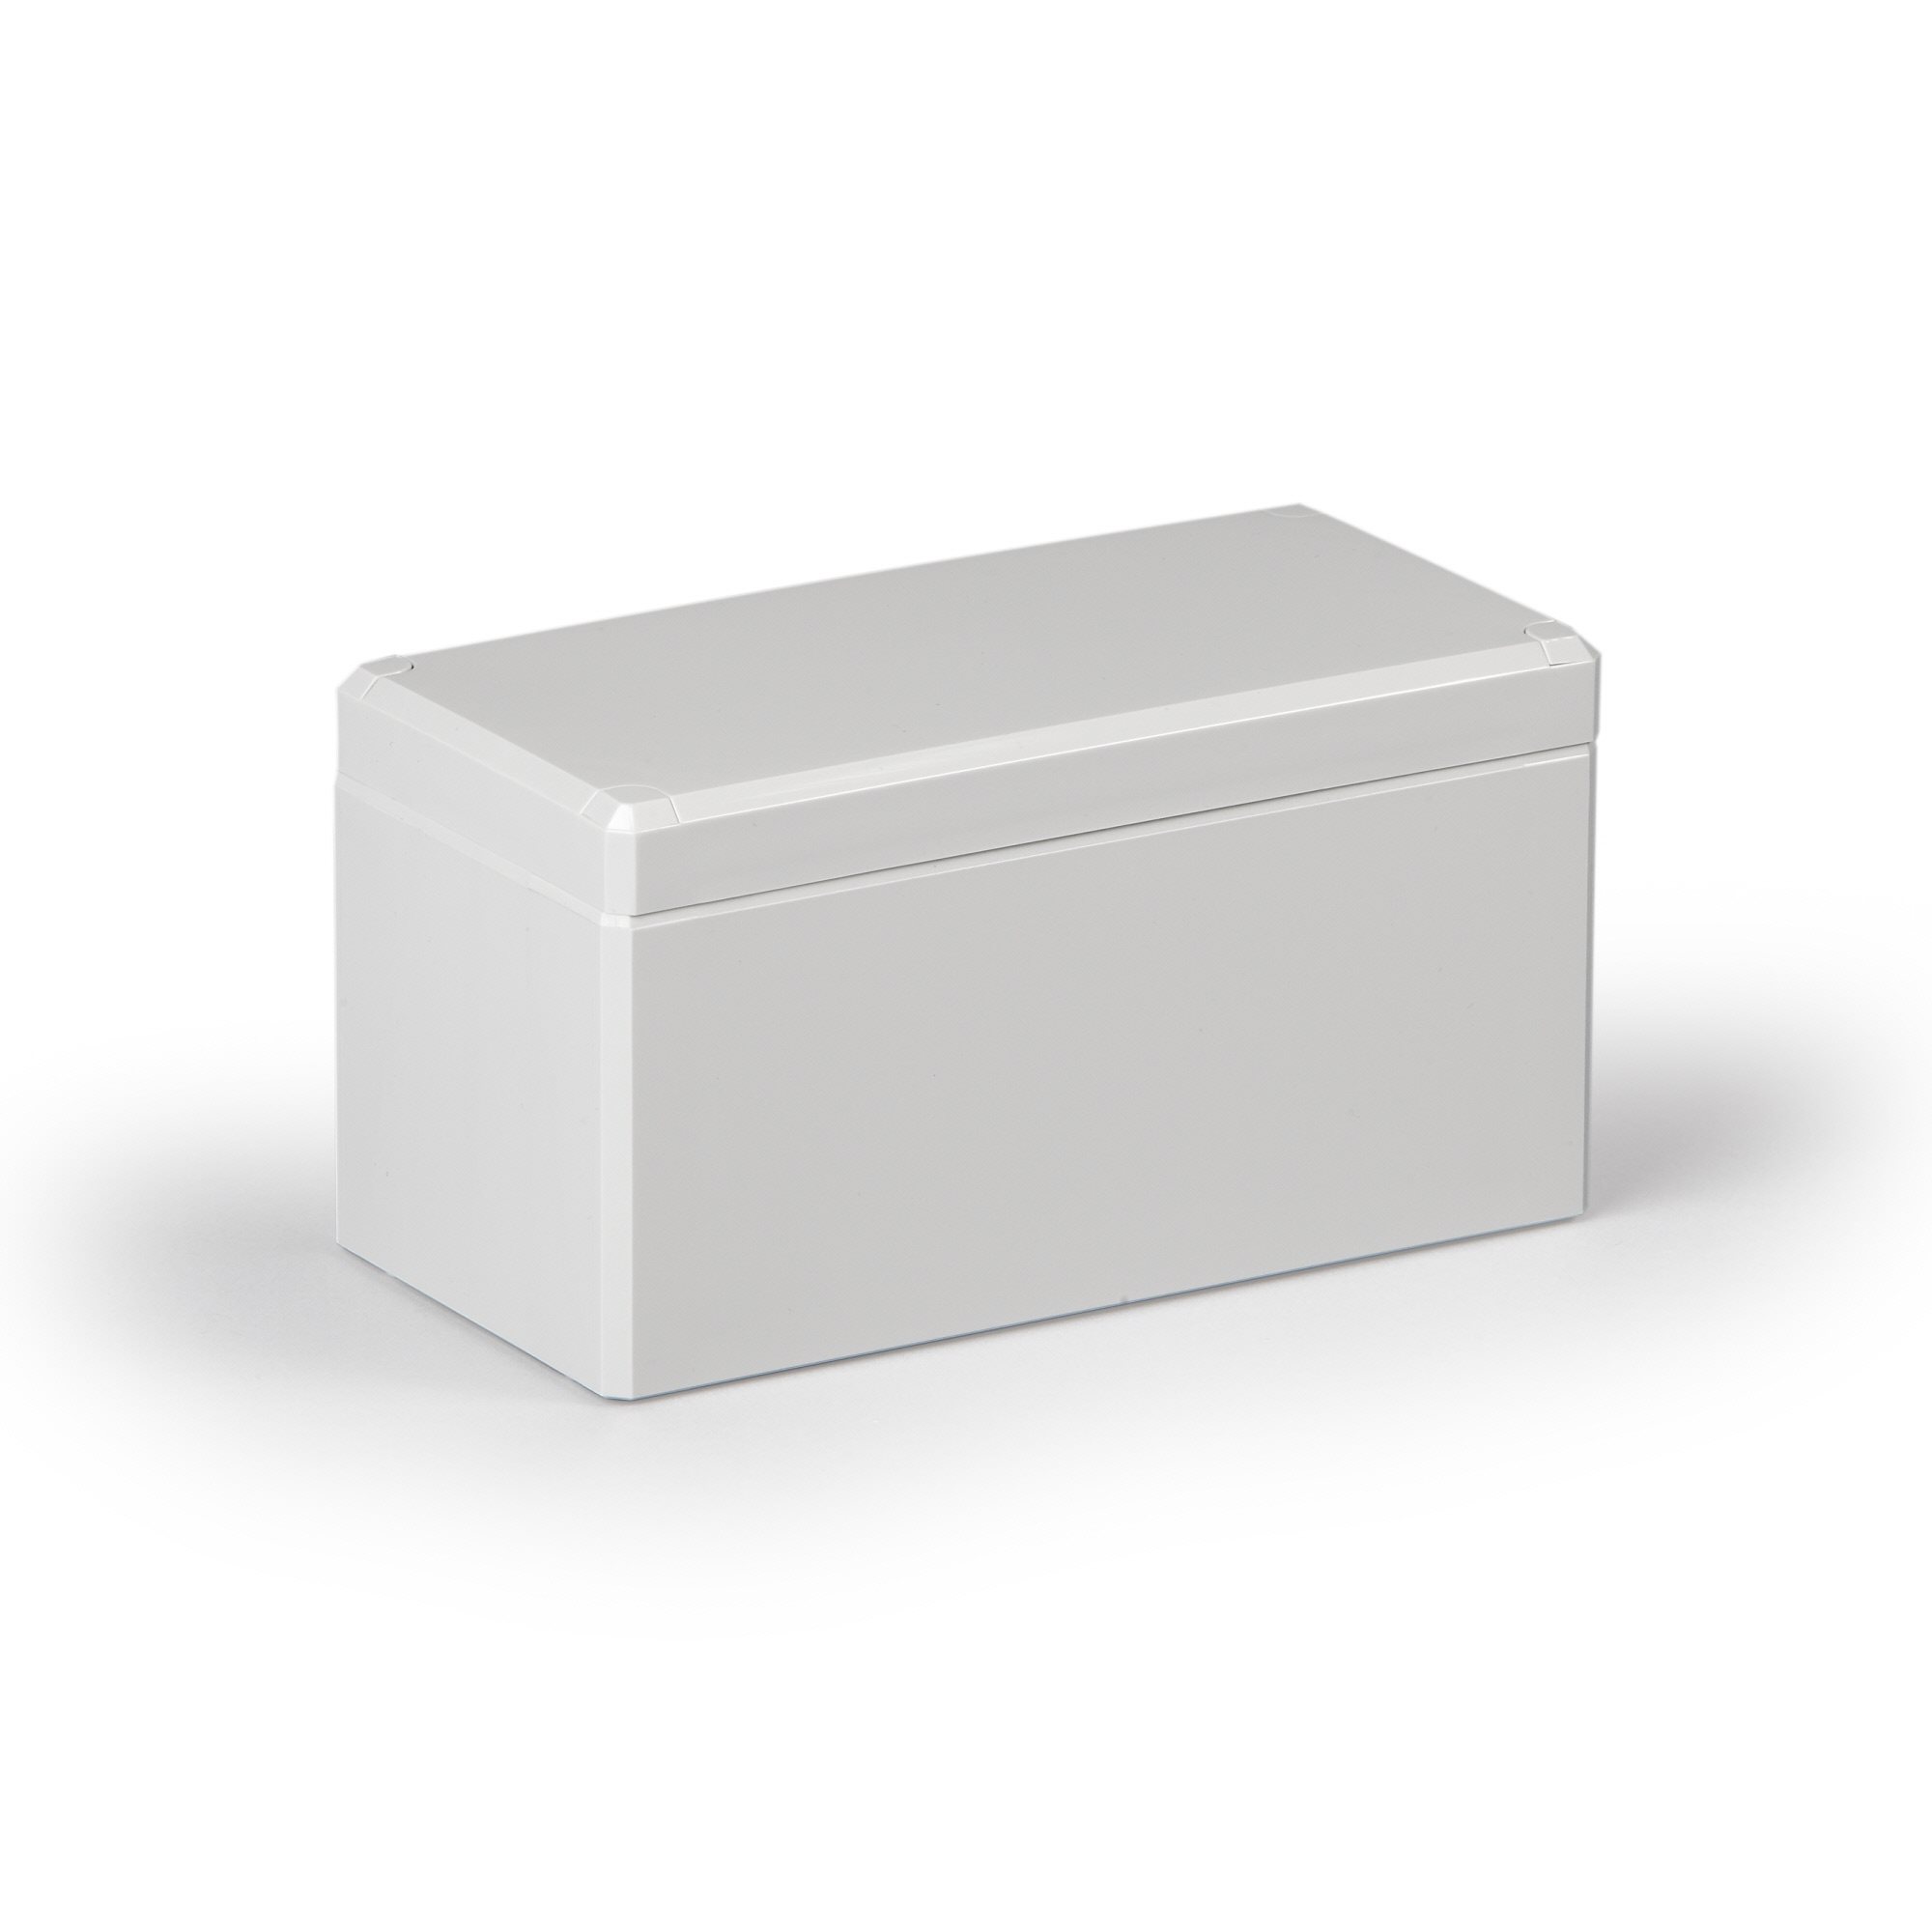 DABP Cubo D Thermoplastic Terminal Box, ABS| 80x160x86 | DABP081609G